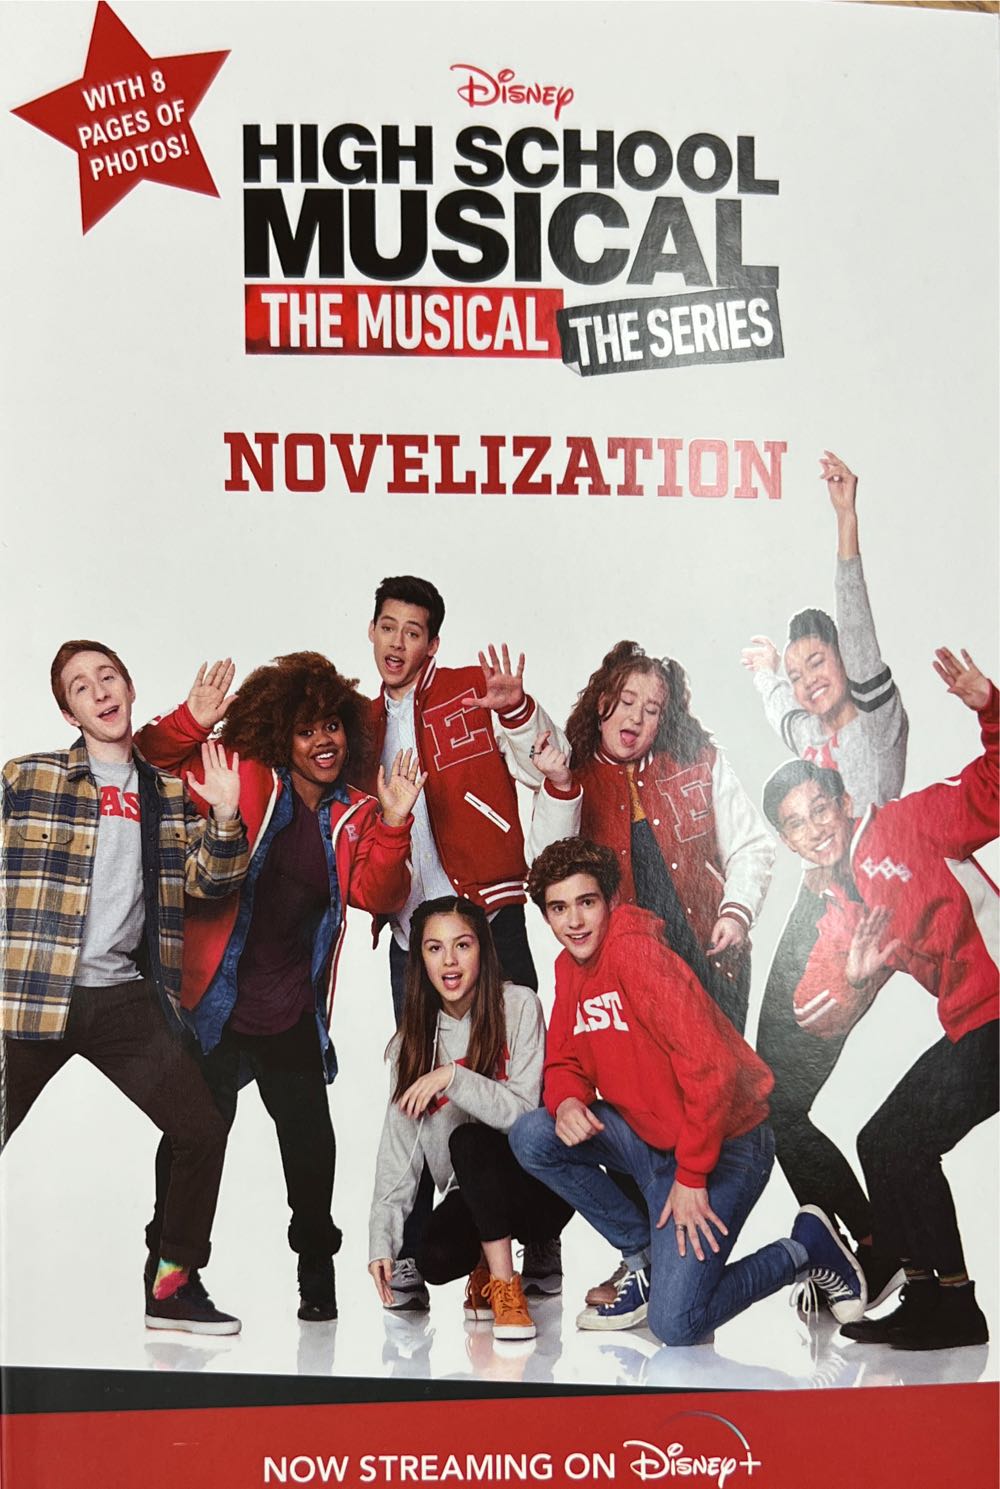 High School Musical TMTS #1: The Series Novelization - Disney Book Group (Disney Press) book collectible [Barcode 9781368061223] - Main Image 1